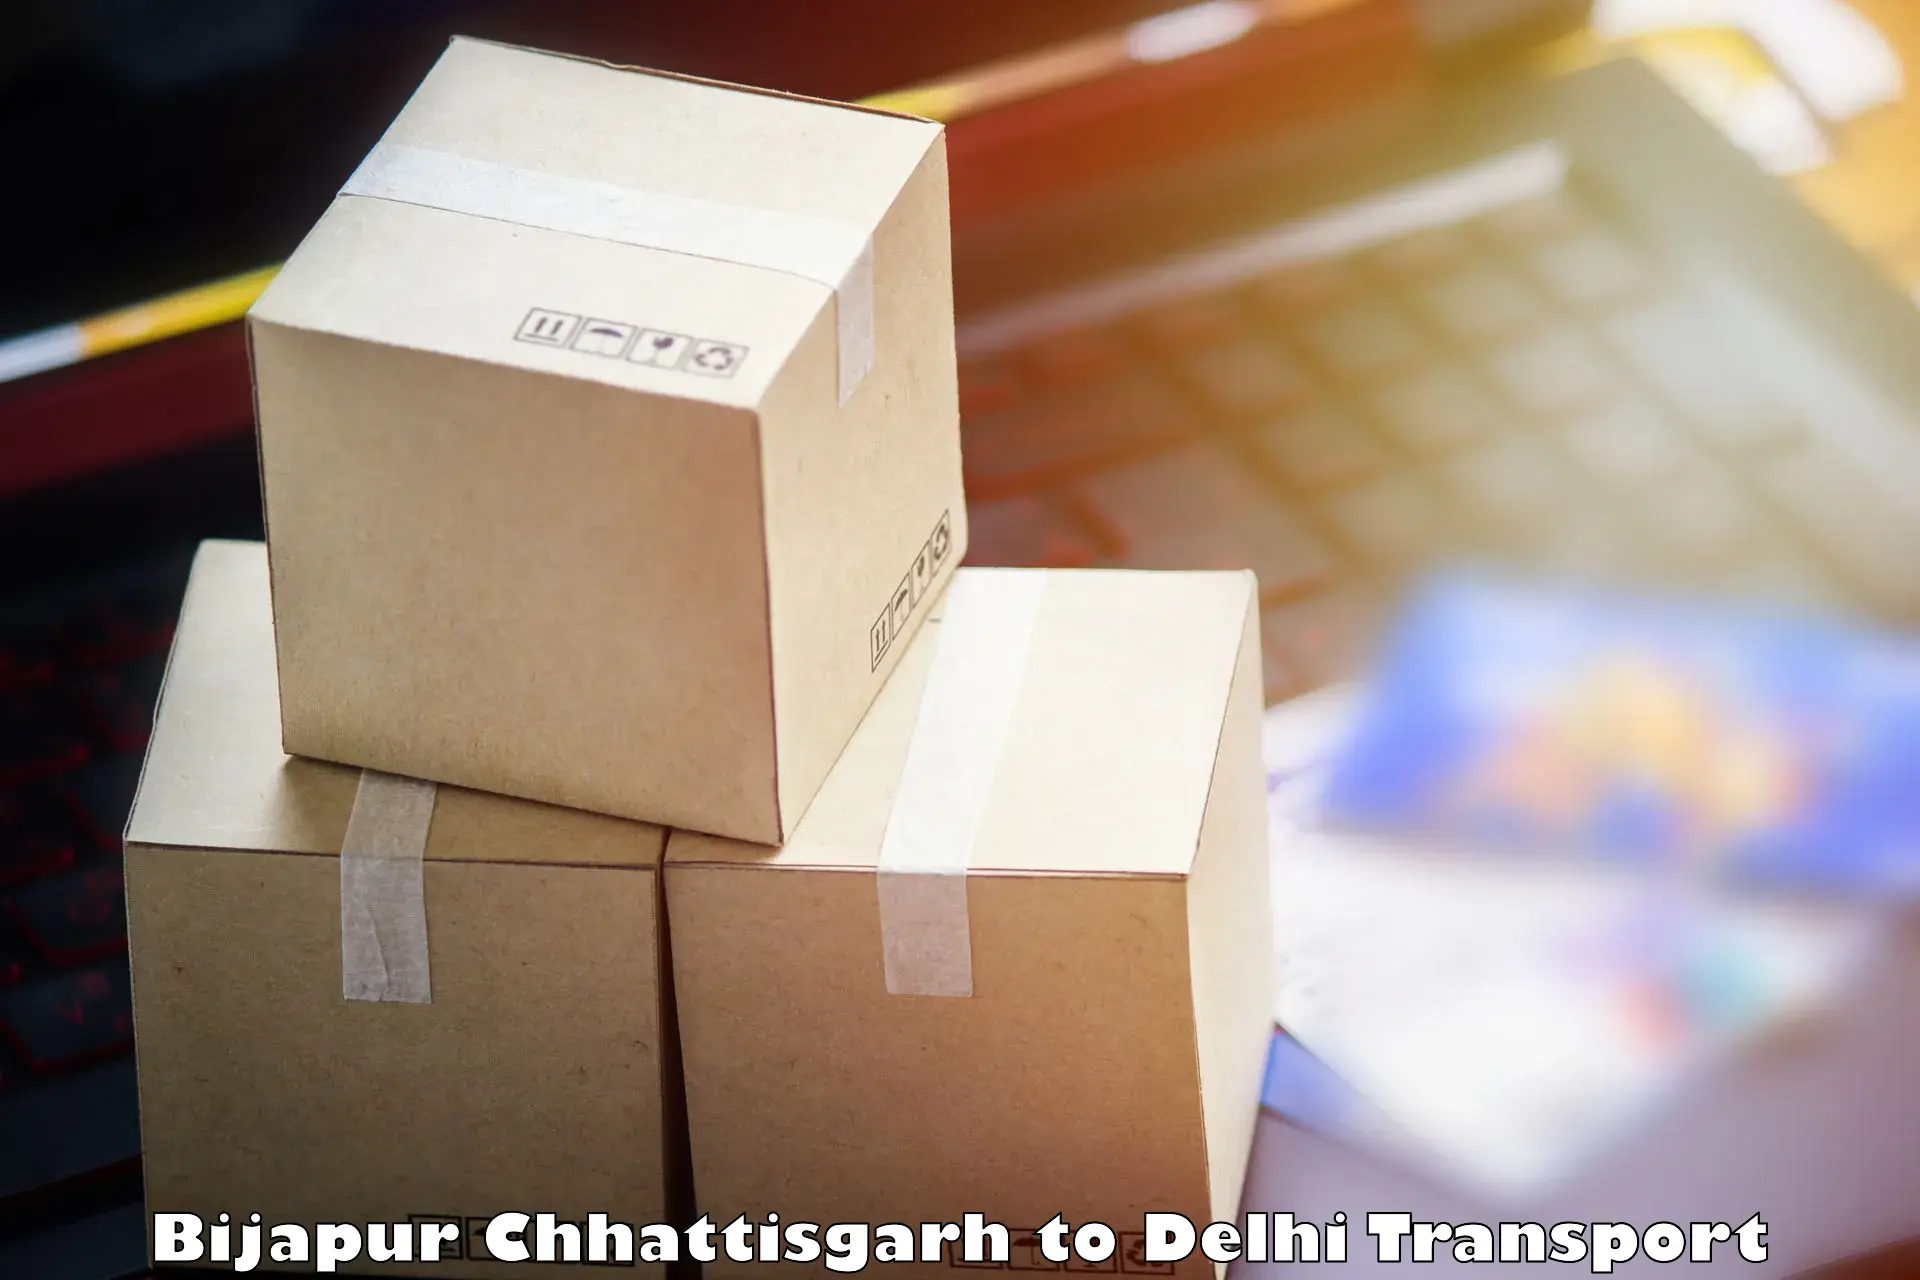 Online transport service Bijapur Chhattisgarh to NCR